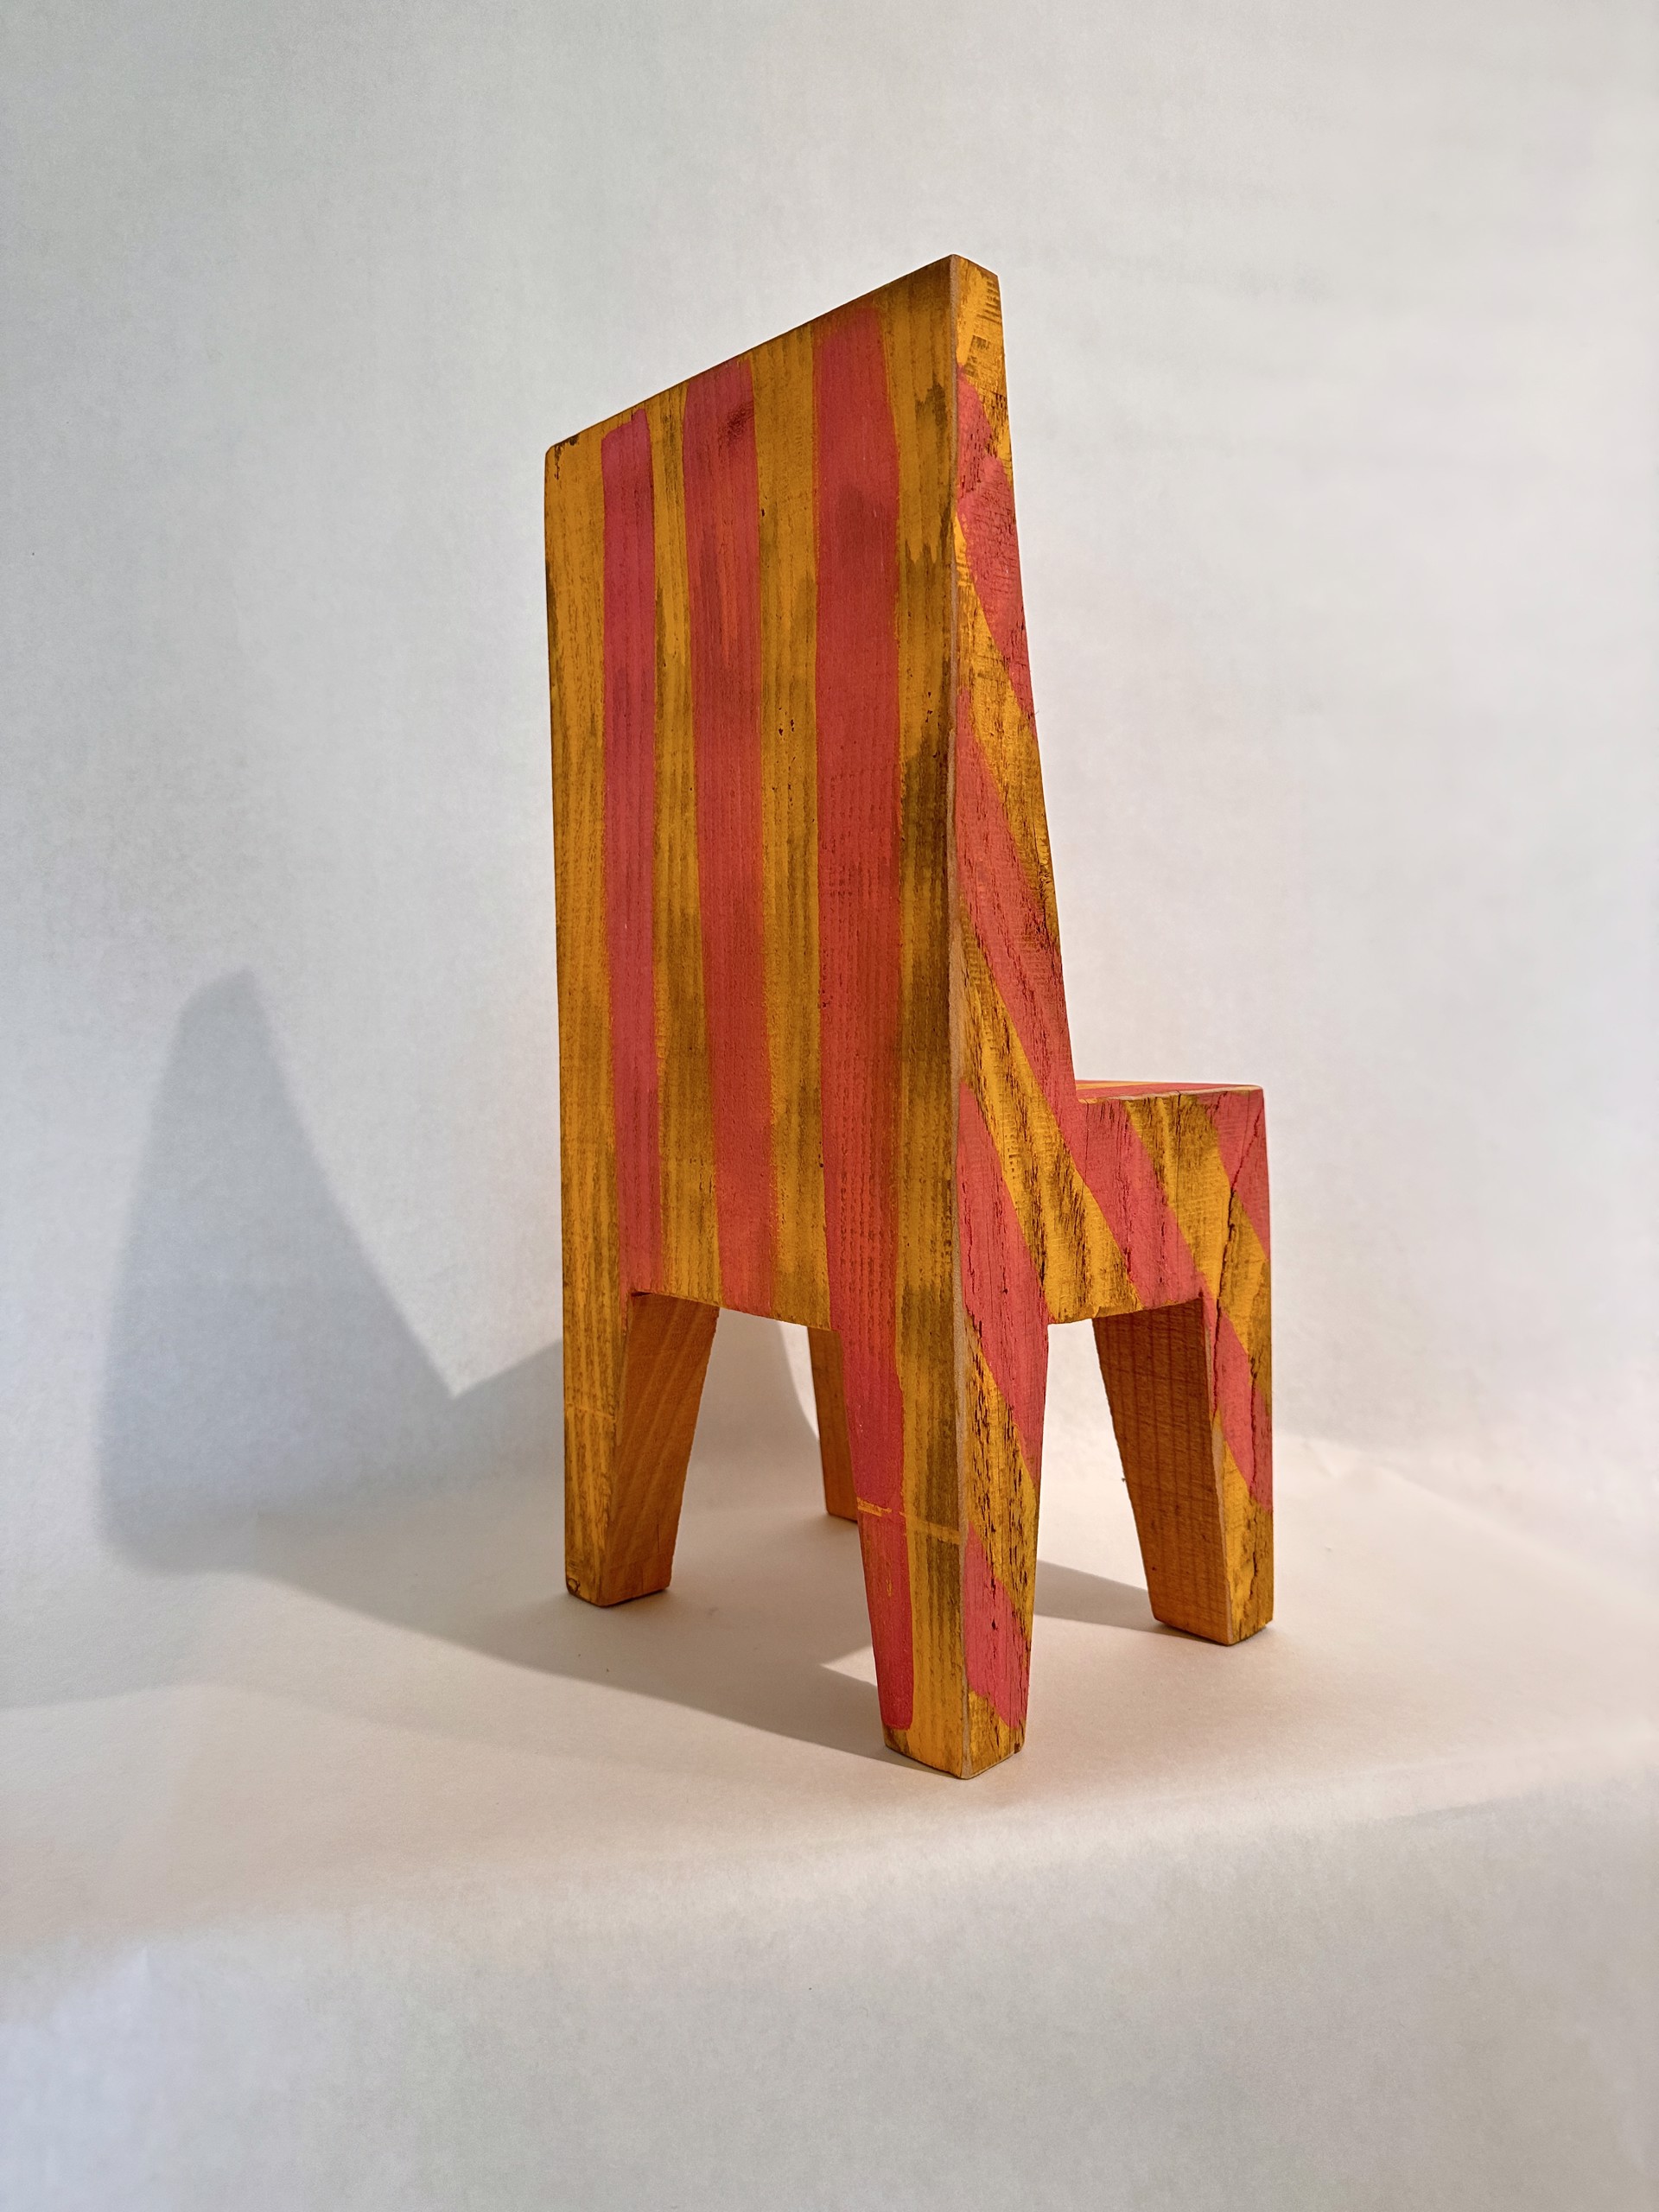 Large Chair Sculpture by Ellie Richards